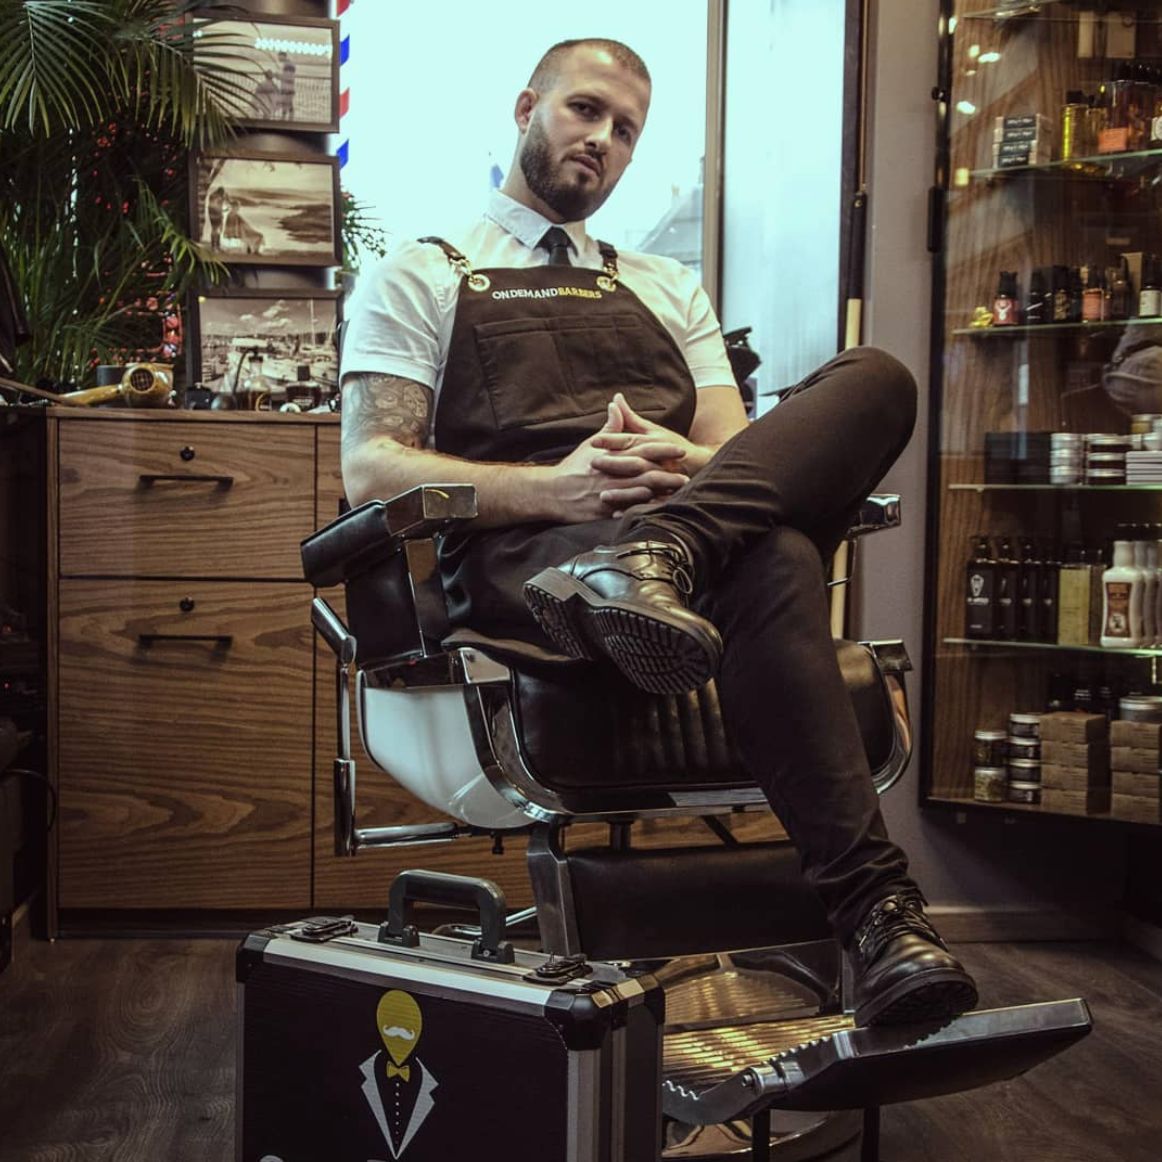 On demand barbers branding